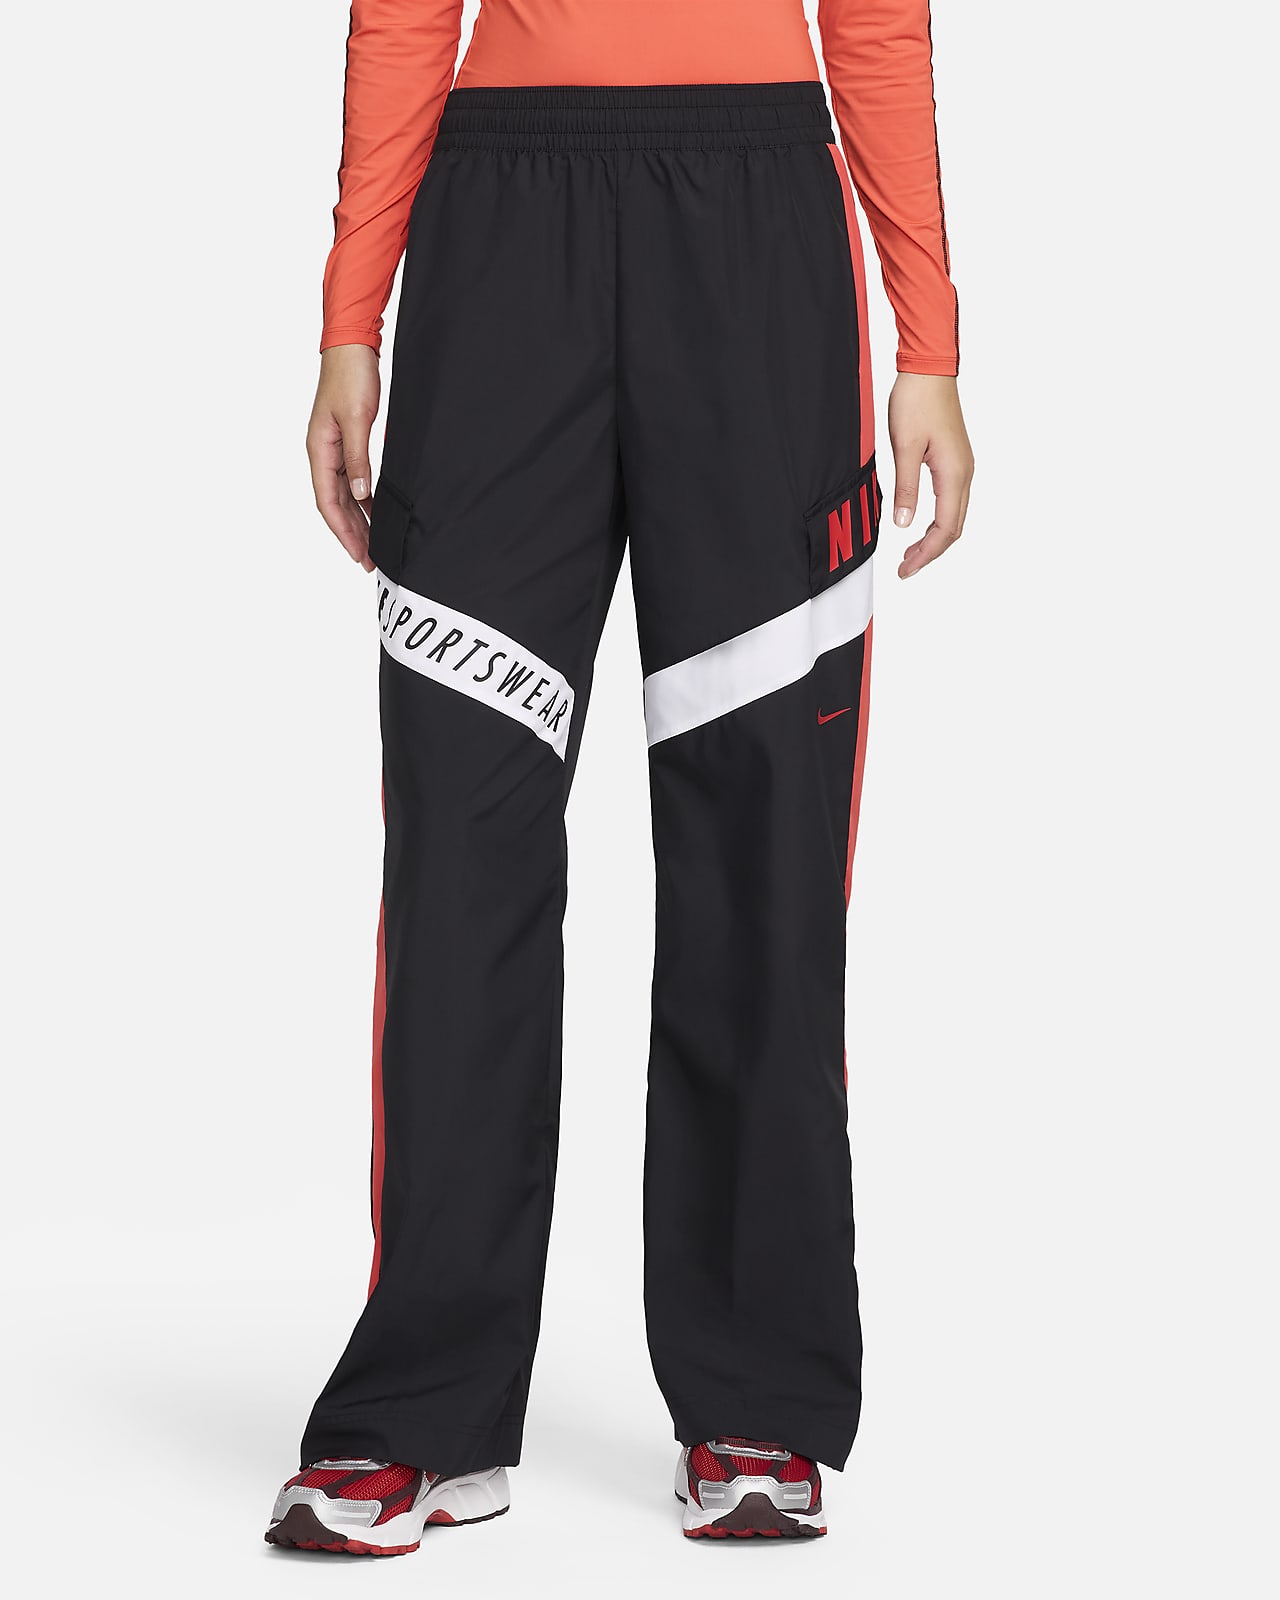 Nike Sportswear damesbroek met hoge taille